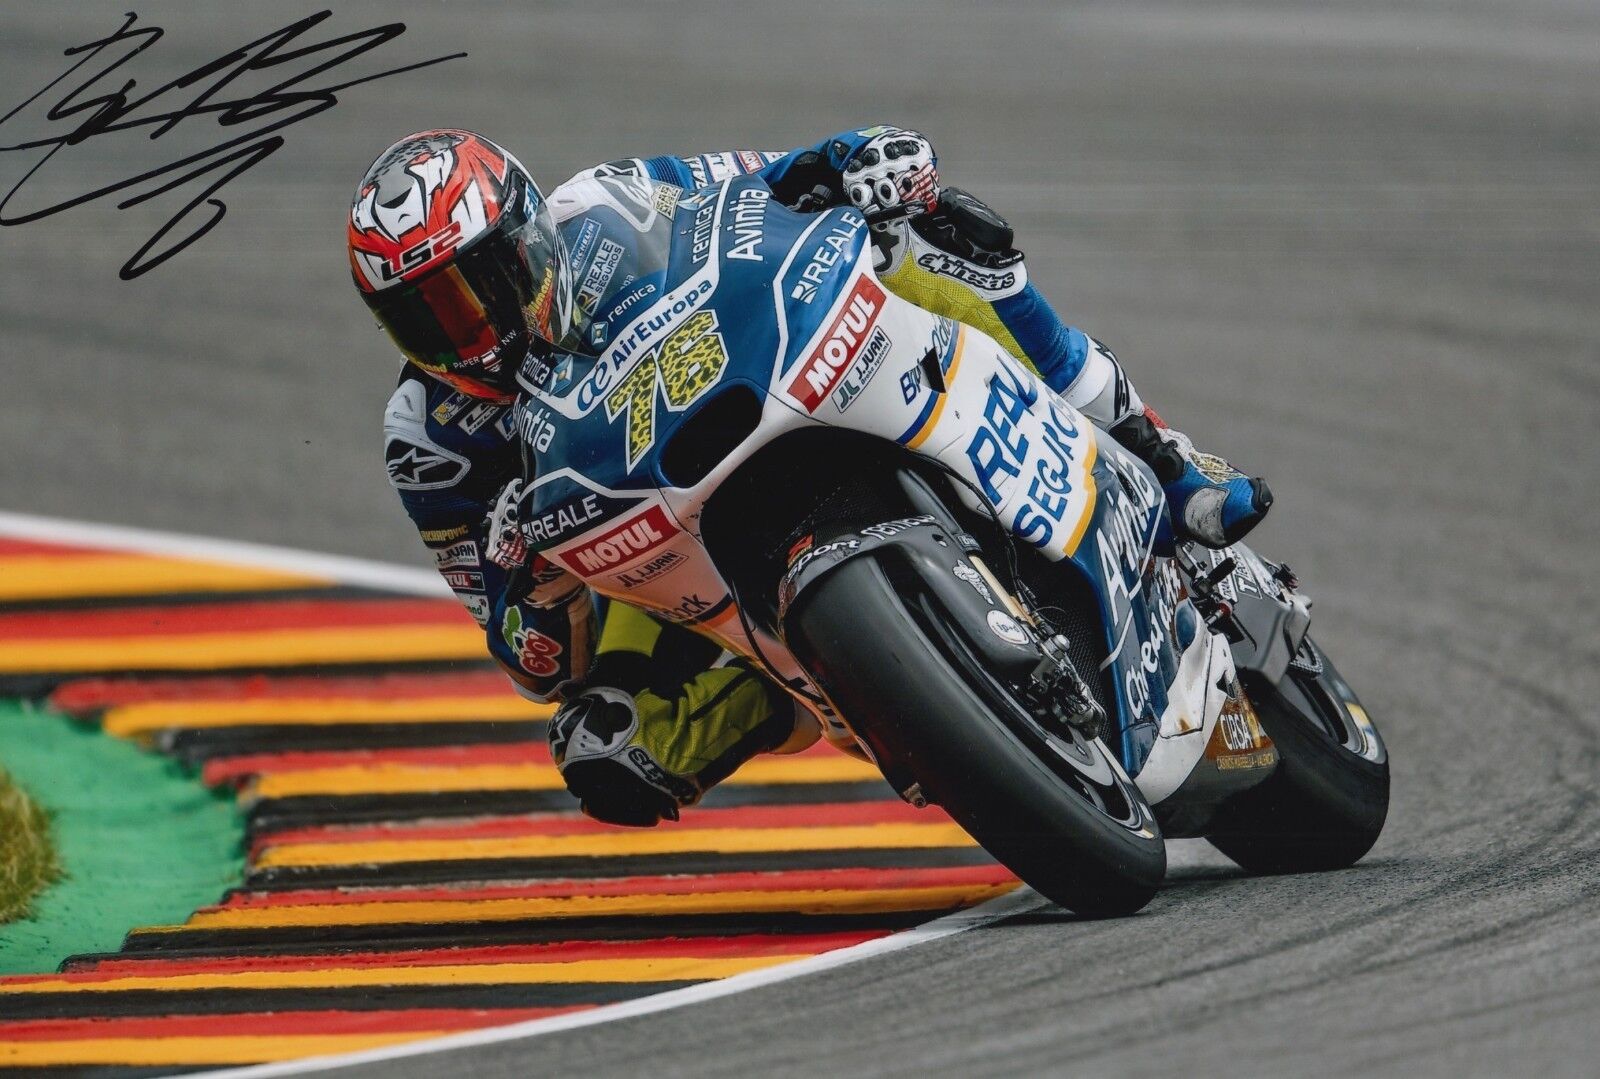 Loris Baz Hand Signed Avintia Racing Ducati 12x8 Photo Poster painting 2017 MotoGP.